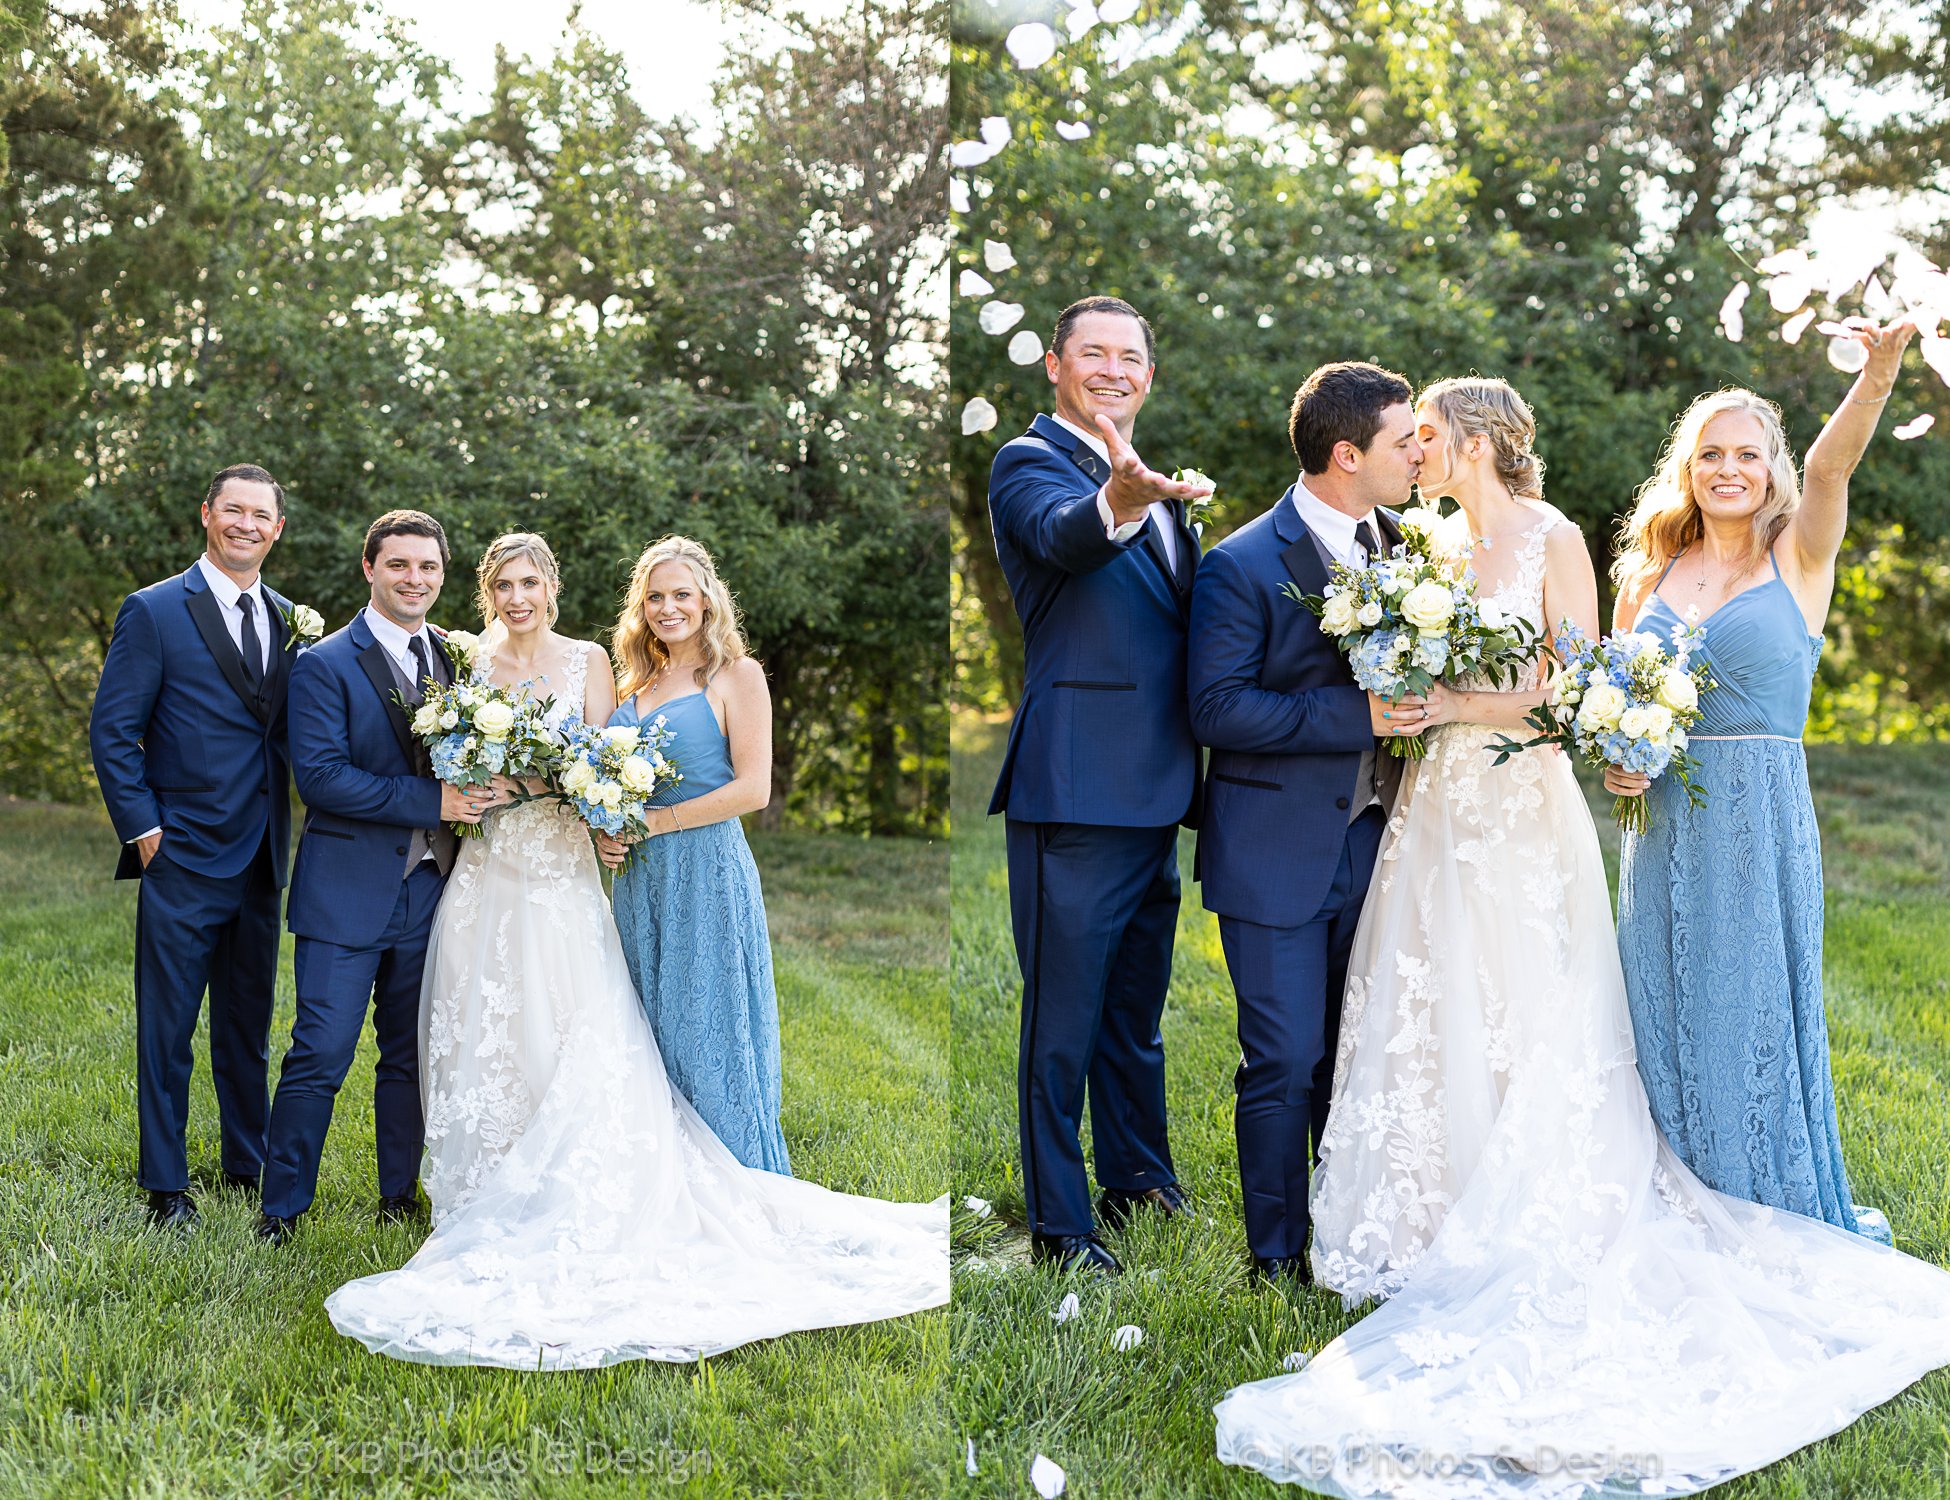 Whitney-Kevin-Destination-Wedding-Best-Wedding-Photographer-St-Louis-STL-West-County-Missouri-bride-groom-photography-KB-Photos-and-Design-619.jpg